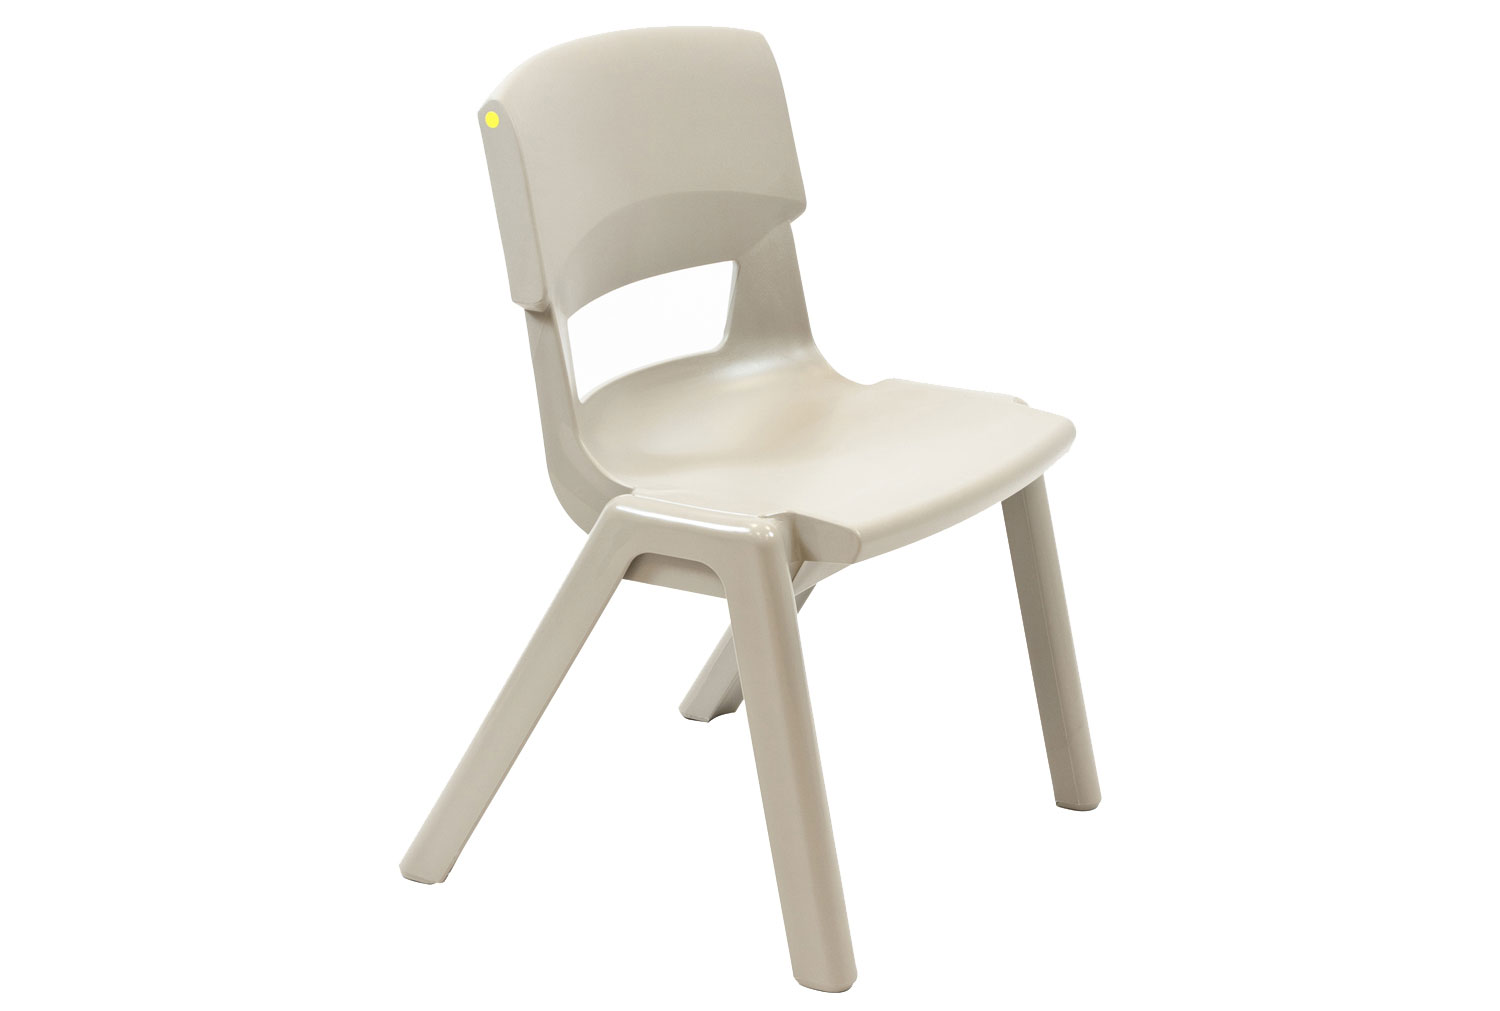 Qty 10 - Postura+ Classroom Chair, 6-8 Years - 34wx31dx35h (cm), Ash Grey